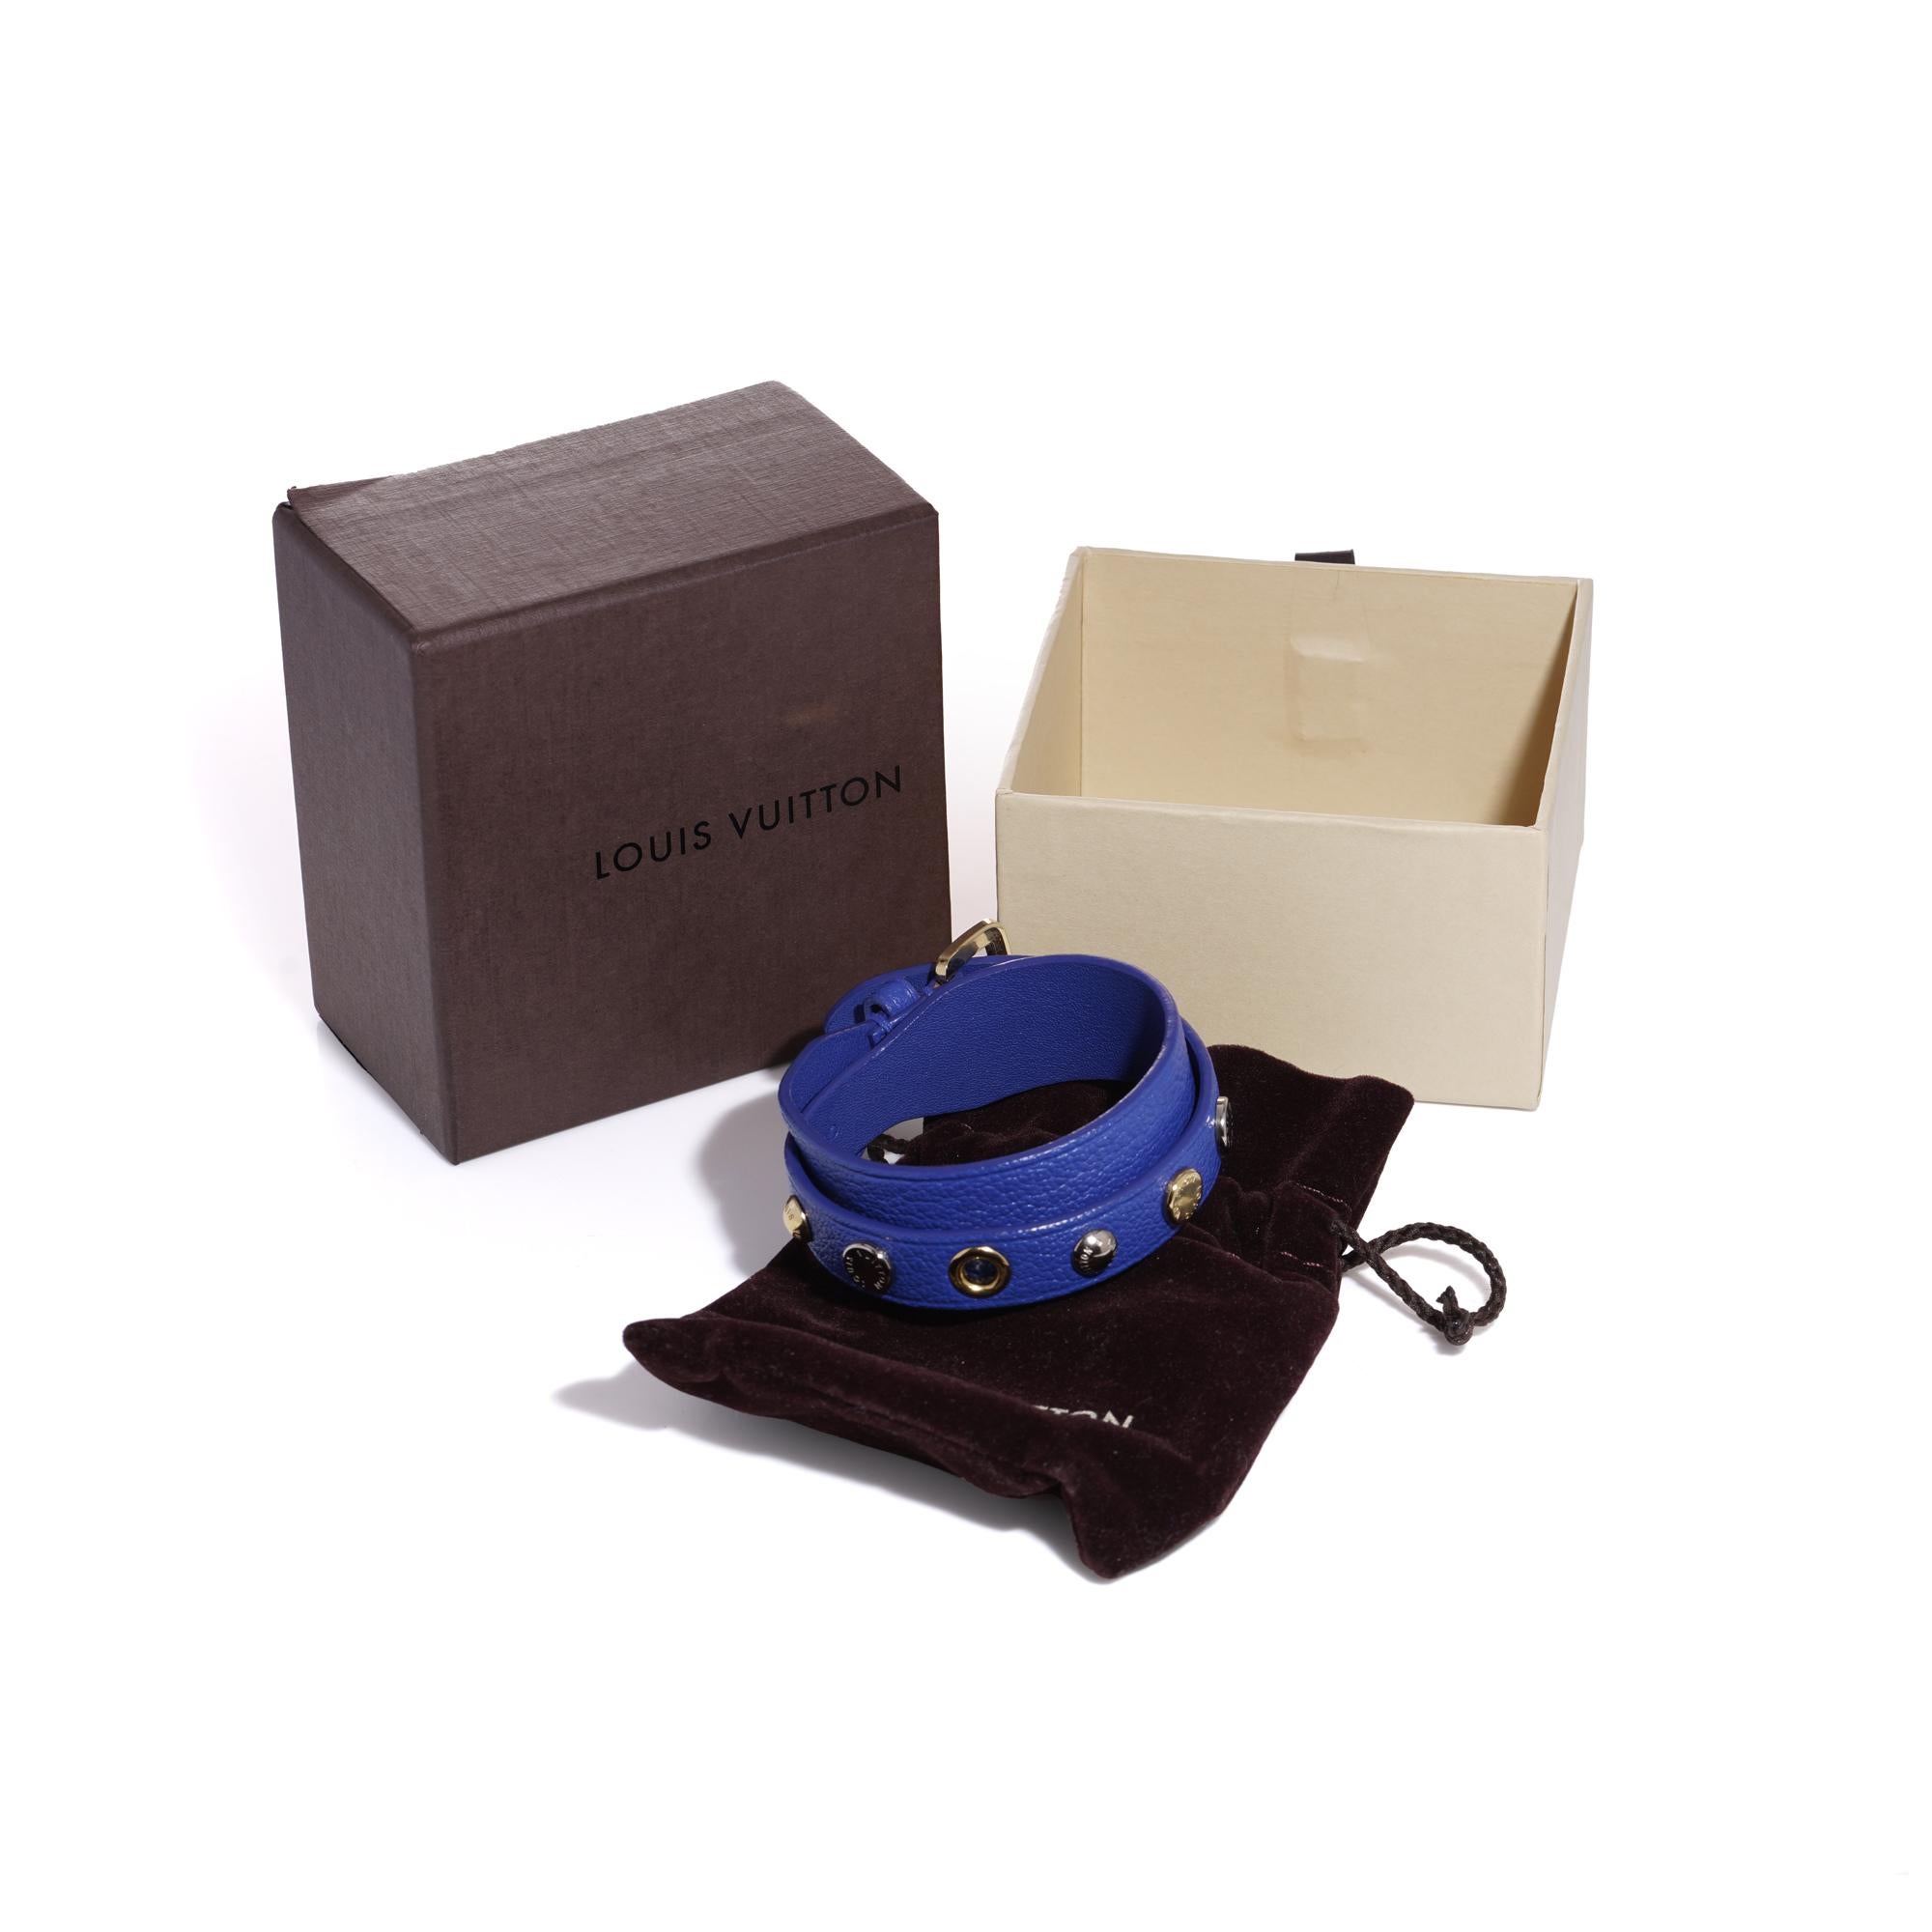 Louis Vuitton Blue Leather belt bracelet. 

Dimensions: 
Size: 17 
Length: 16 cm
Width: 2 cm
Total length: 41 cm 

Comes with a dust bag and display box. 